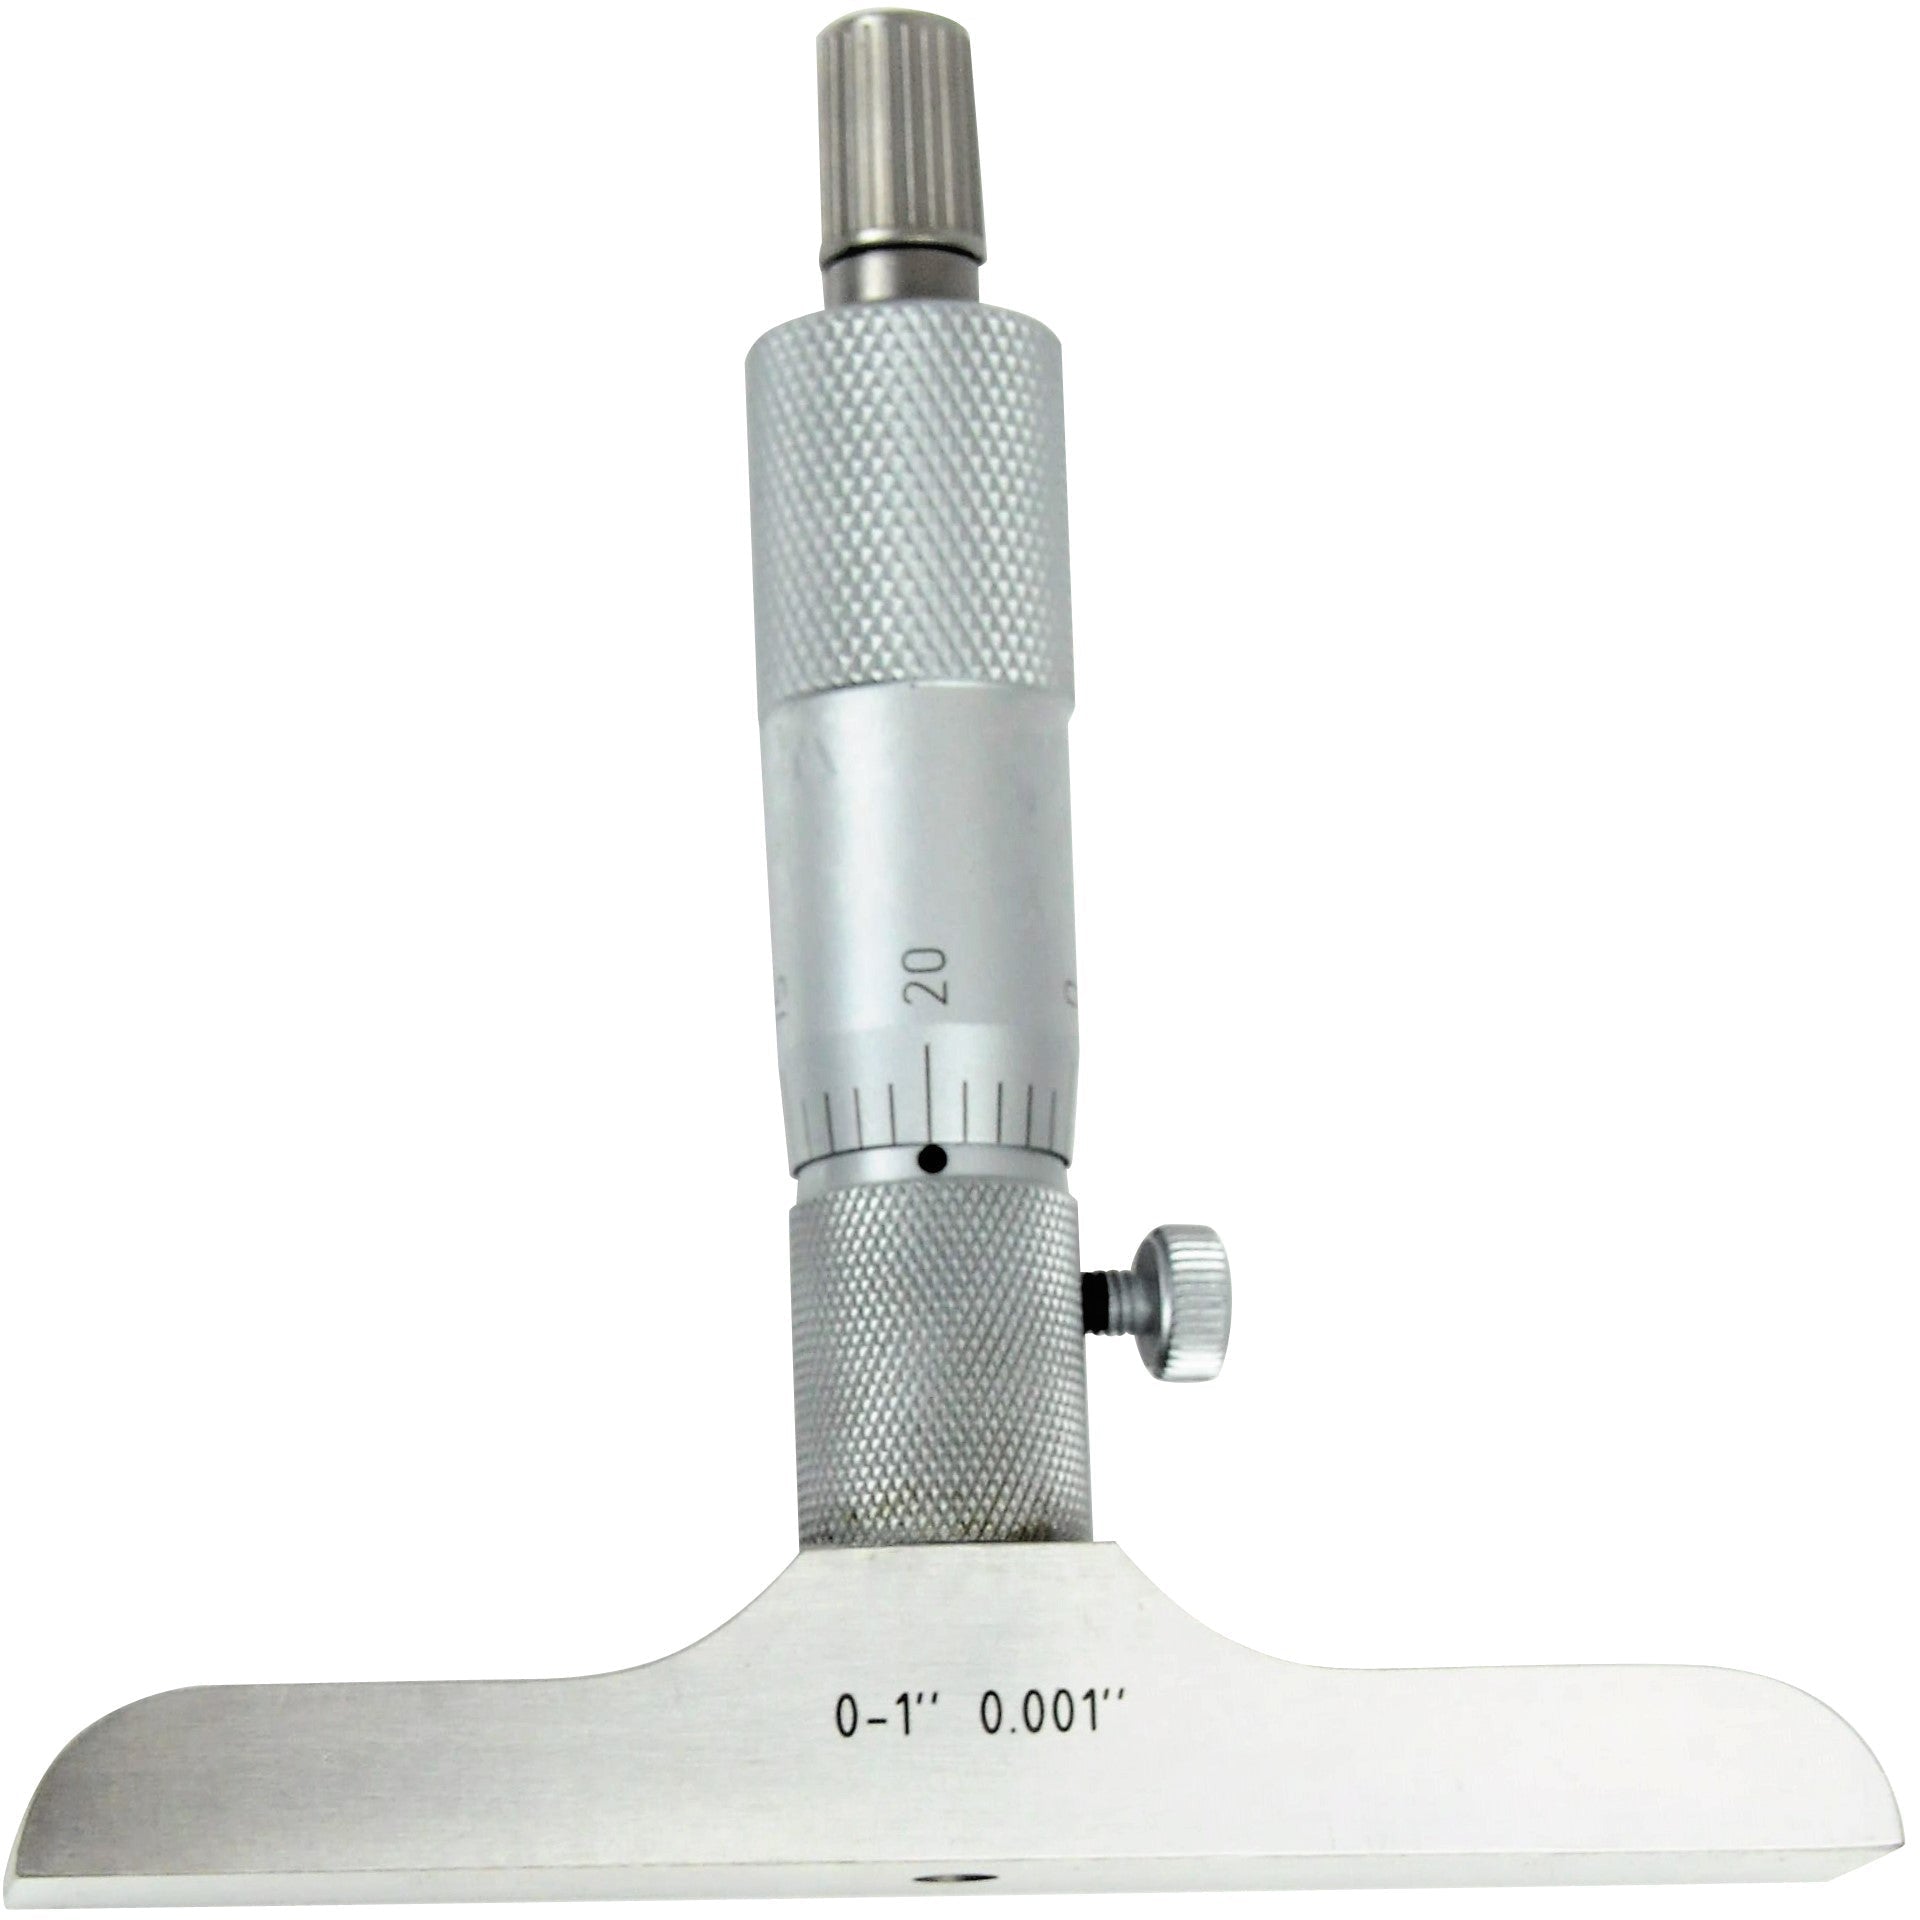 Insize Imperial Depth Micrometer 0-6" Range Series 3240-6